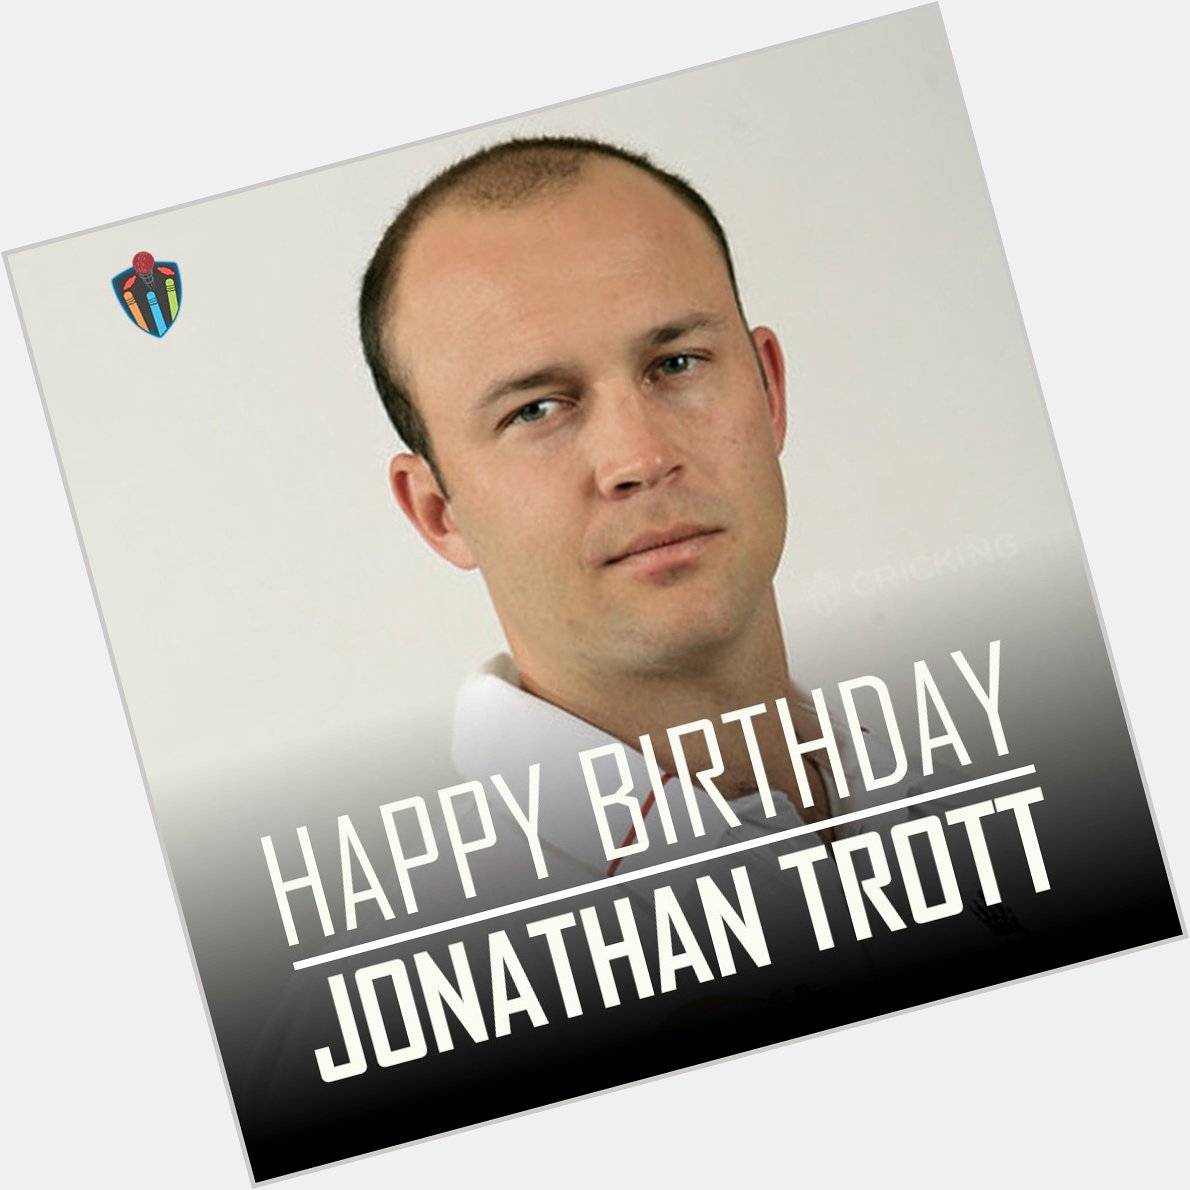 Happy Birthday Jonathan Trott. The English cricketer turns 36 today. 